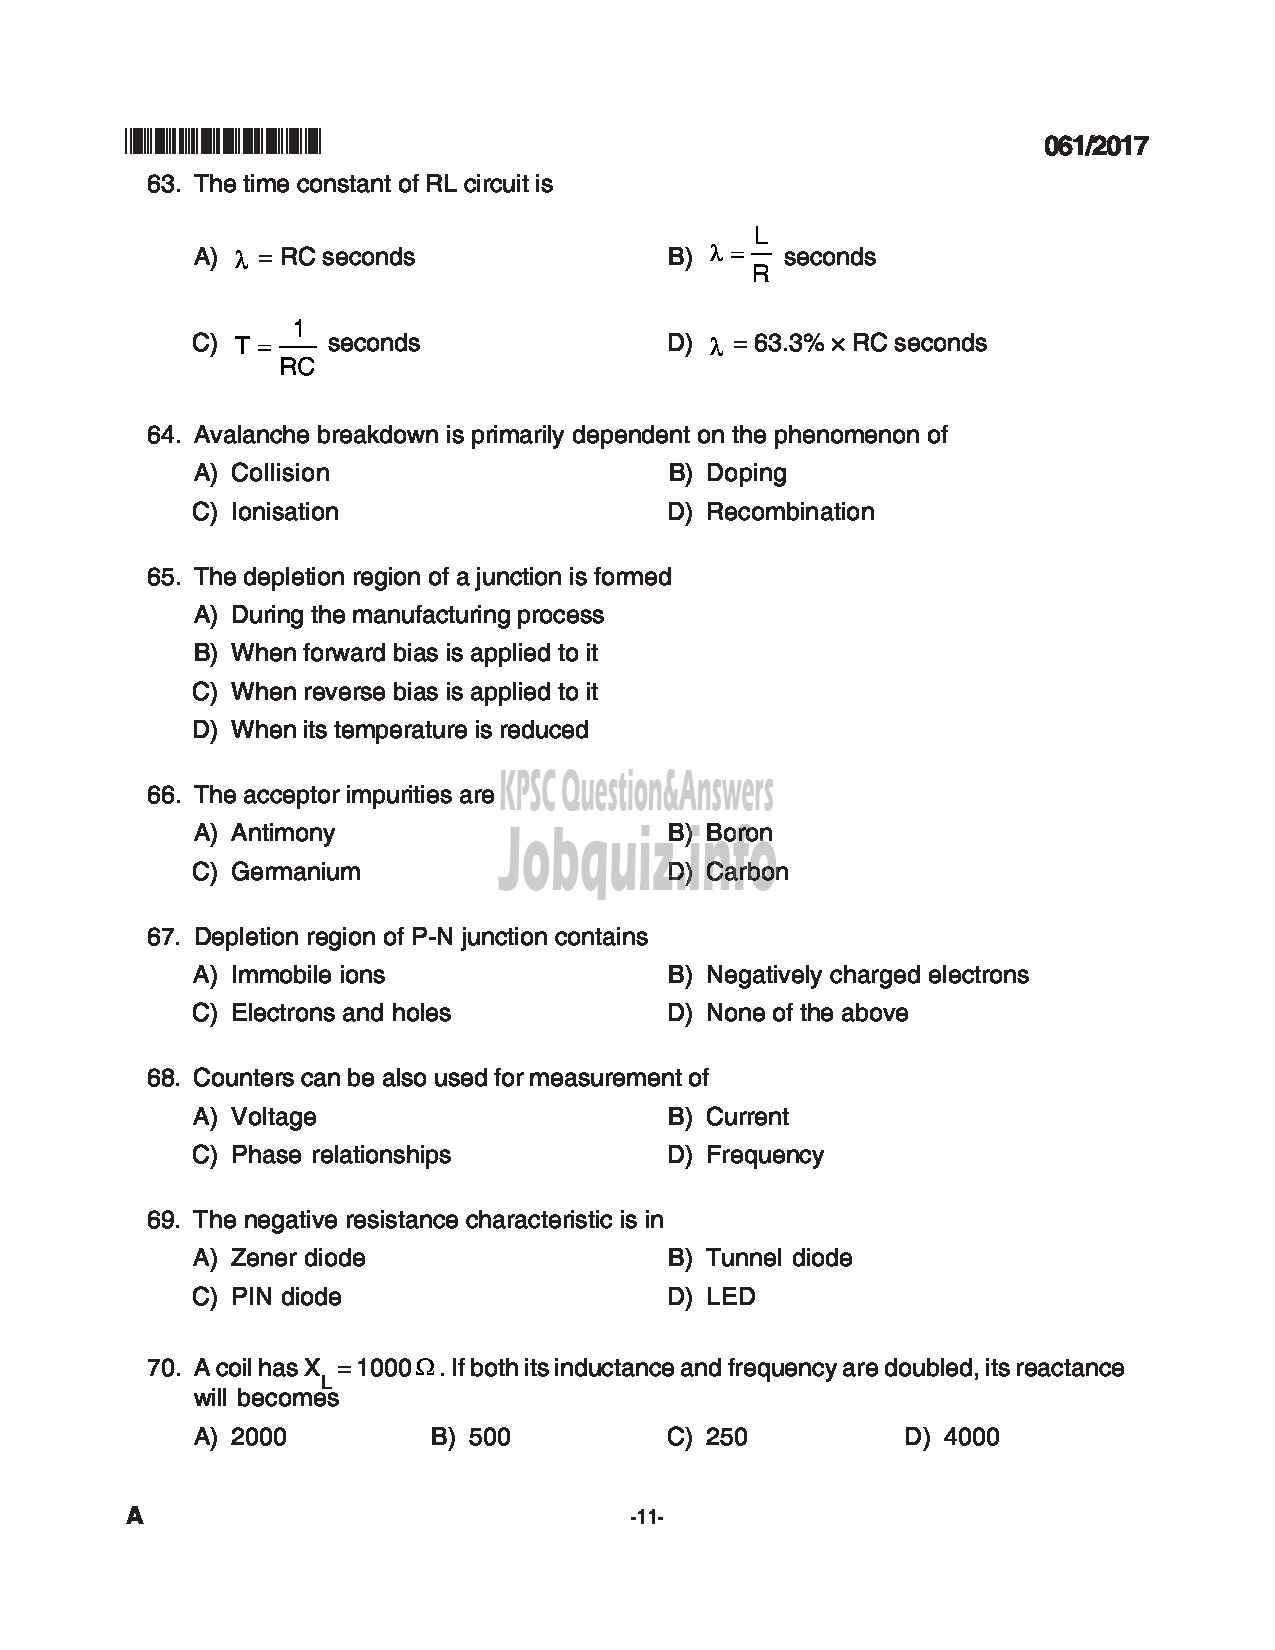 Kerala PSC Question Paper - TRADESMAN ELECTRONICS TECHNICAL EDUCATION QUESTION PAPER-11